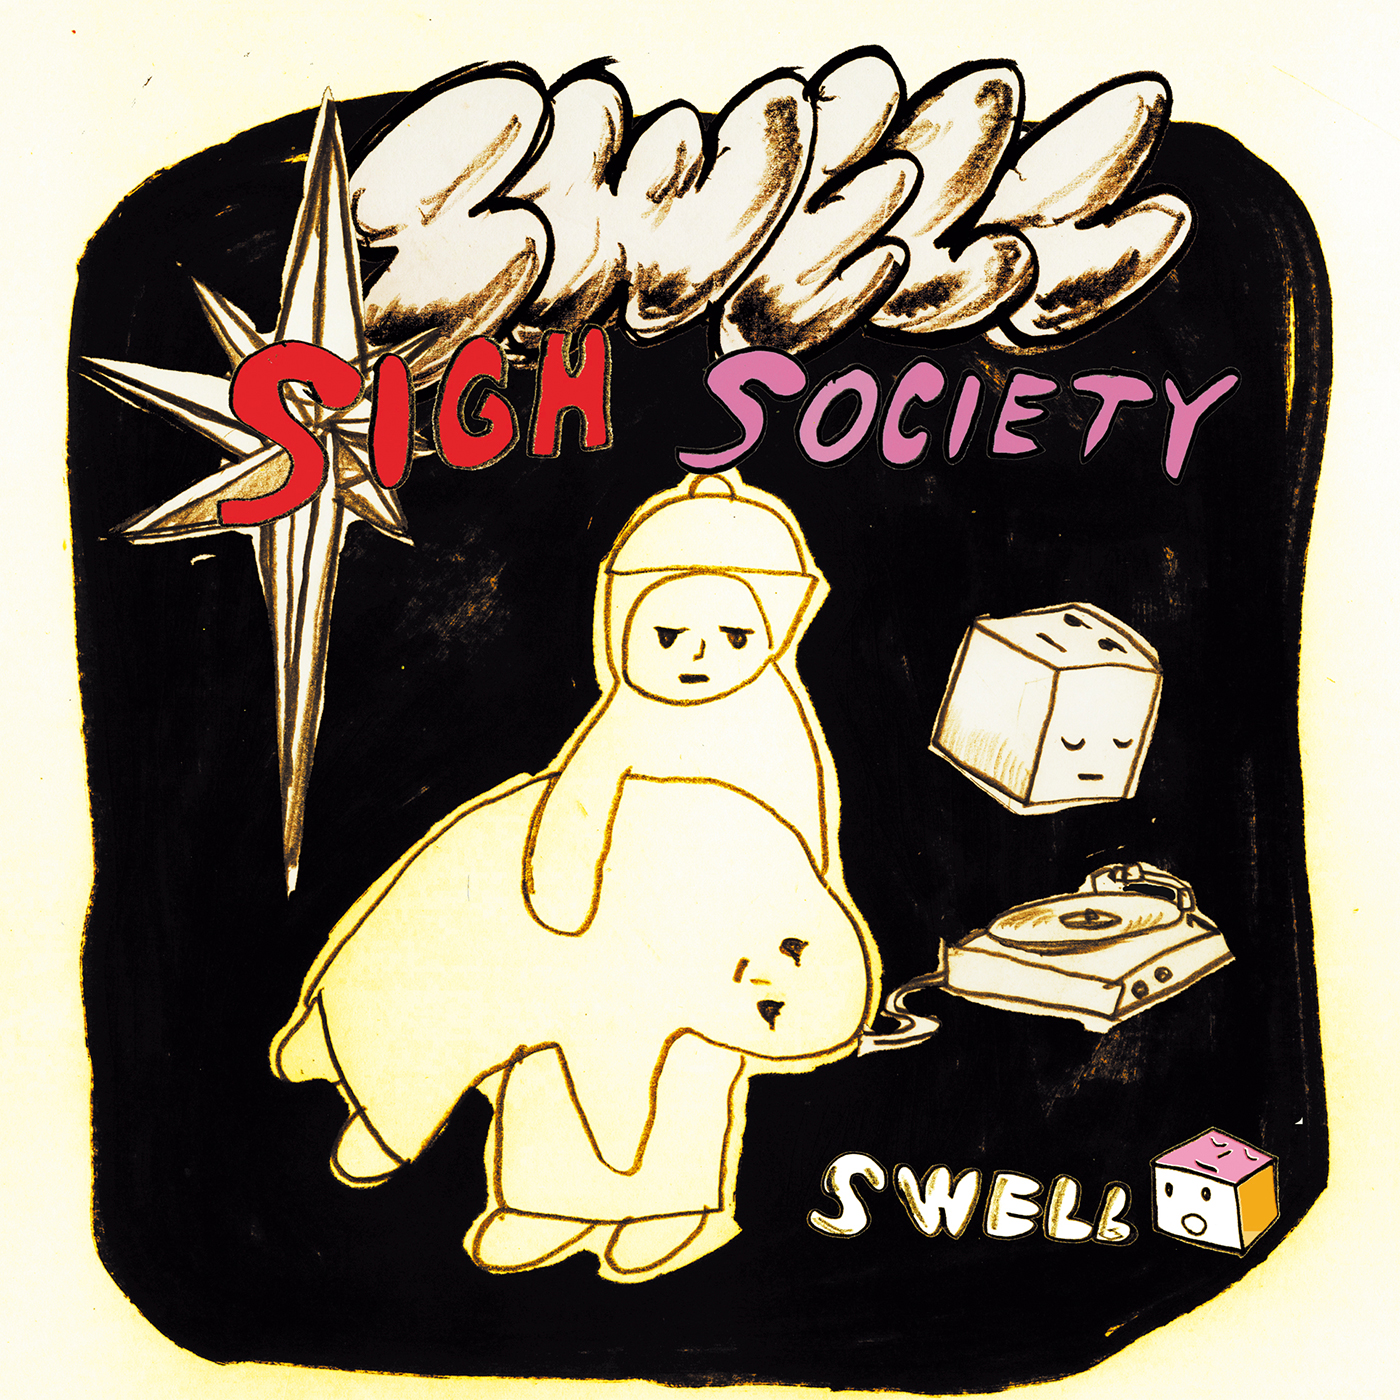 Swell EP / Sigh Society